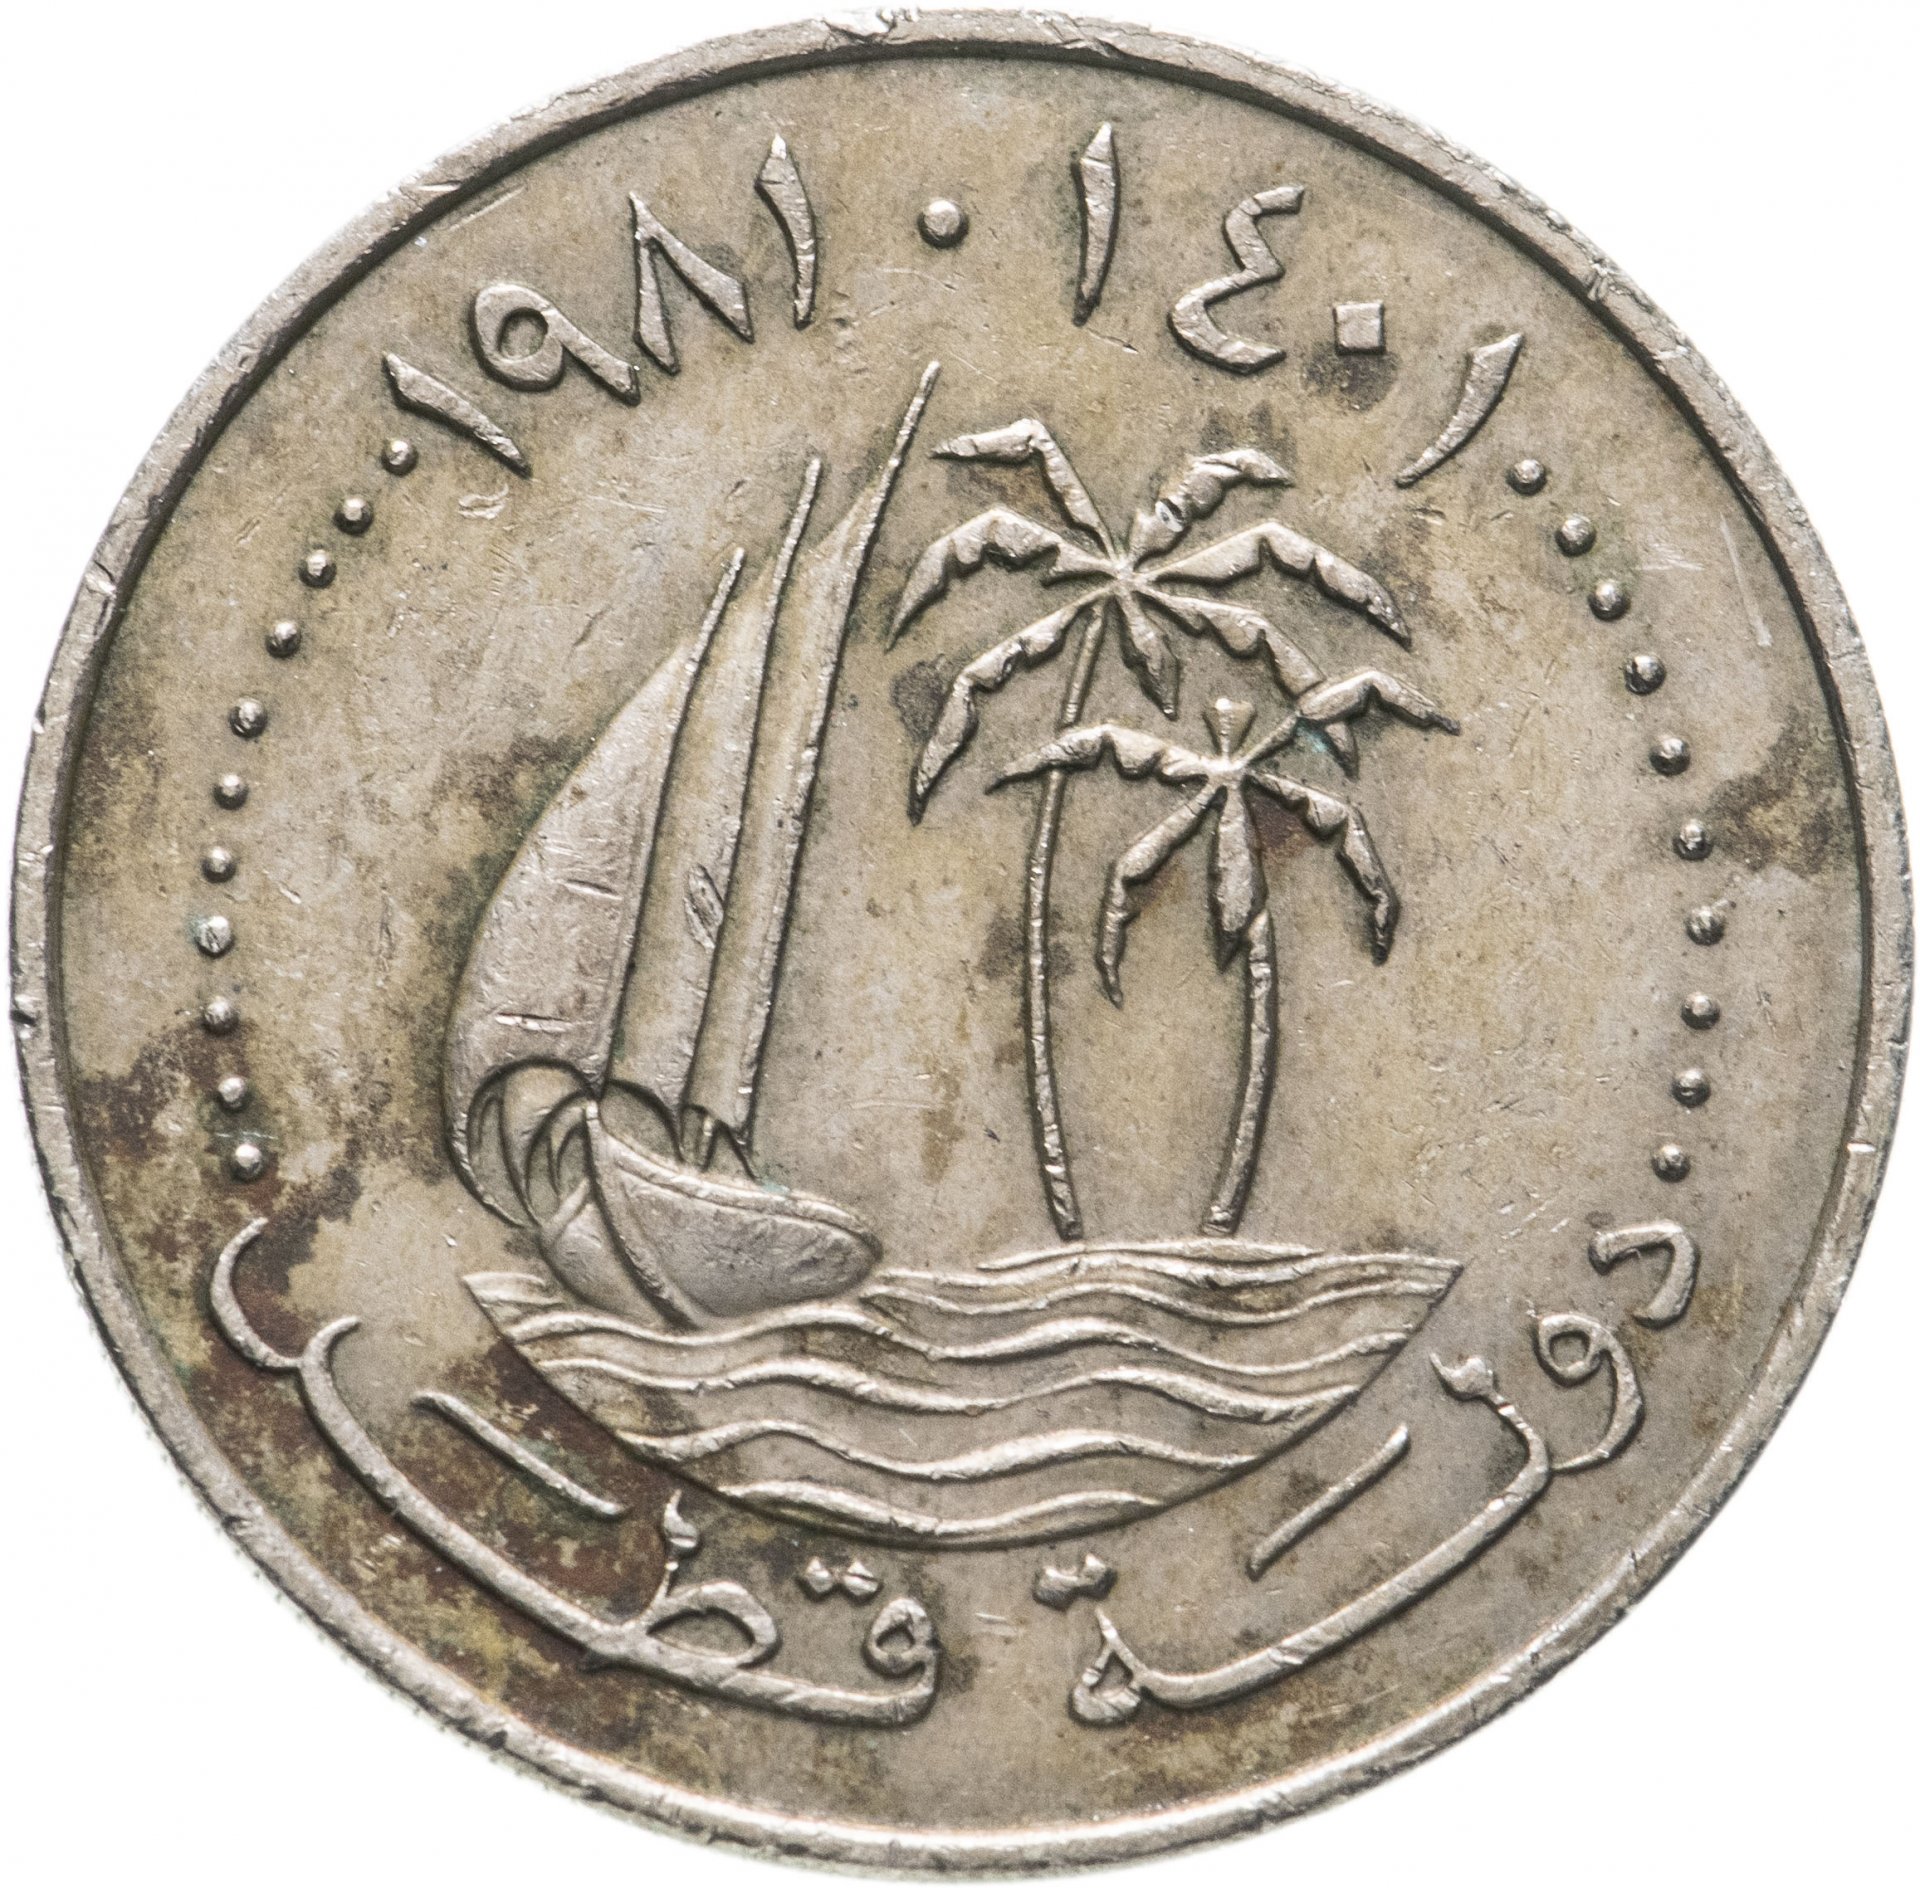 130 дирхам. Арабские монеты. Монеты Катара. Дирхамы монеты. Арабская монета 50.